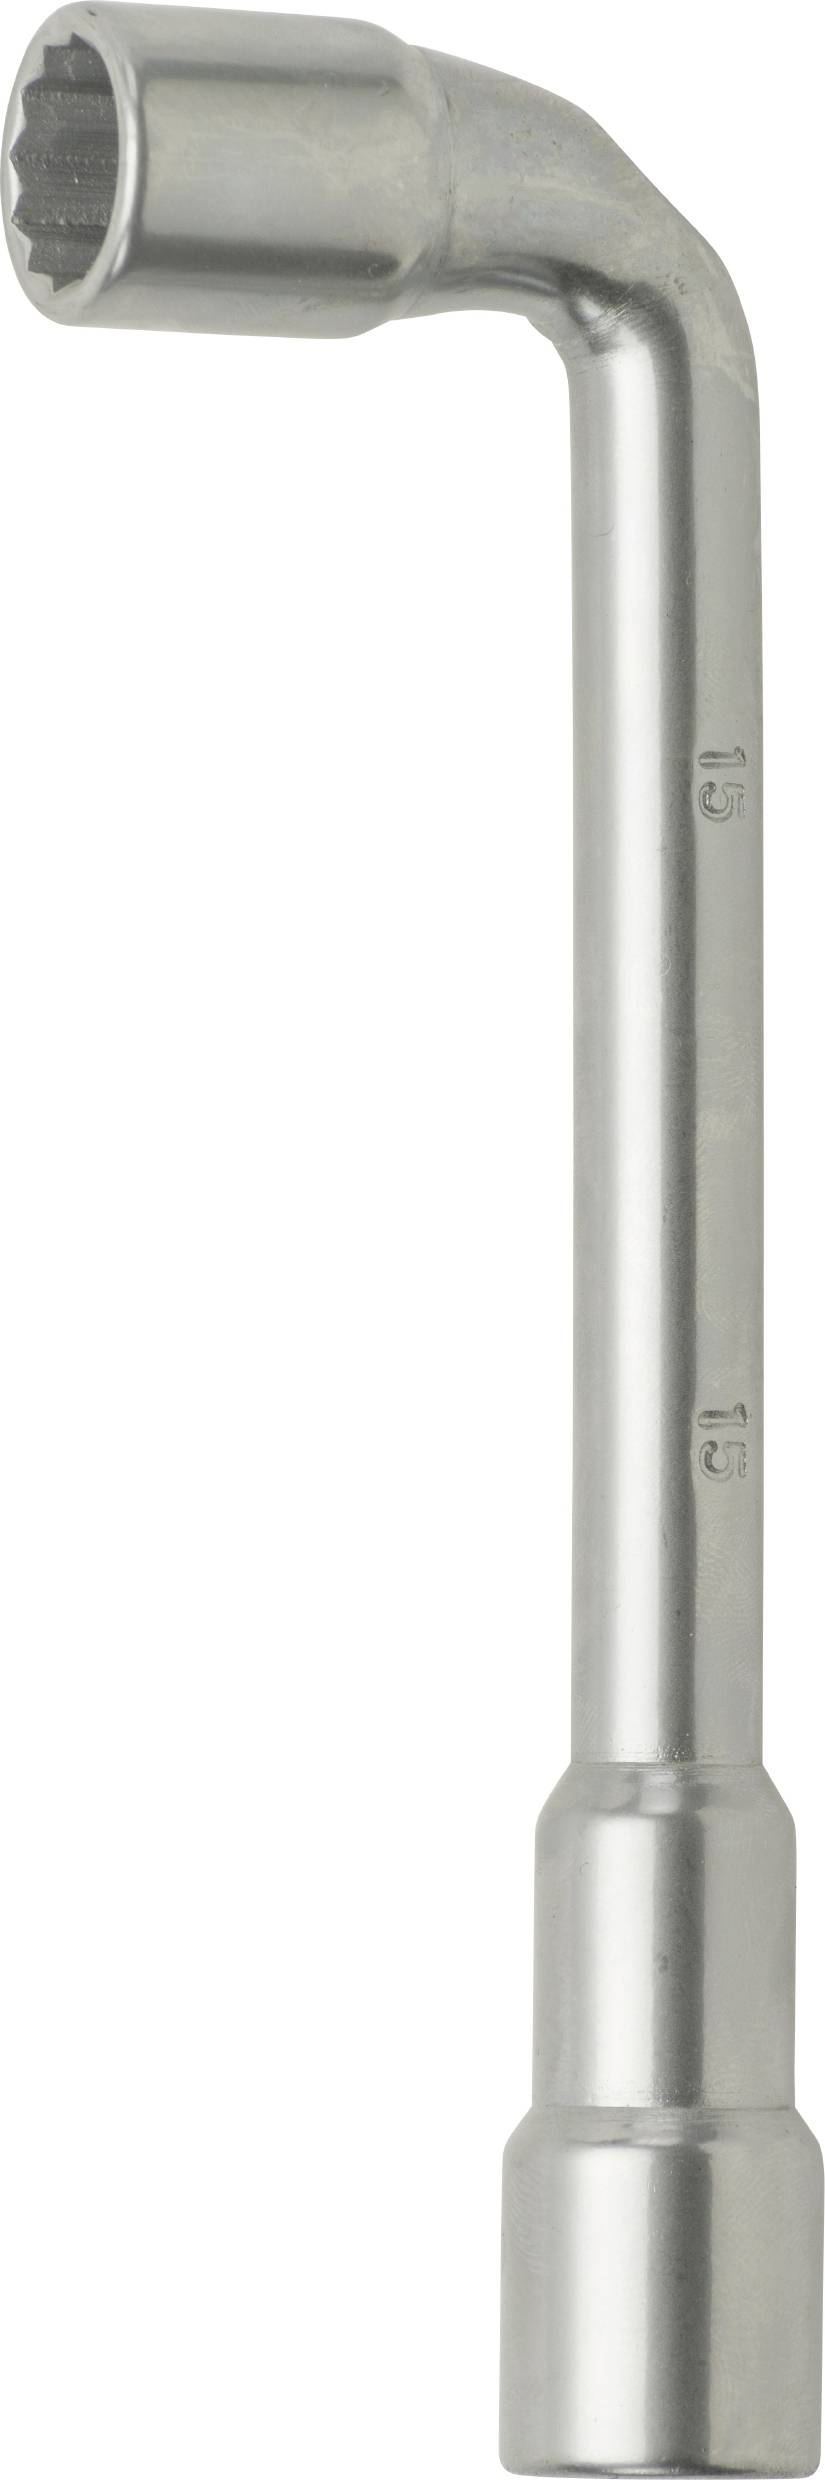 KWB 470118 Ringschlüssel 1 Stück 18 mm